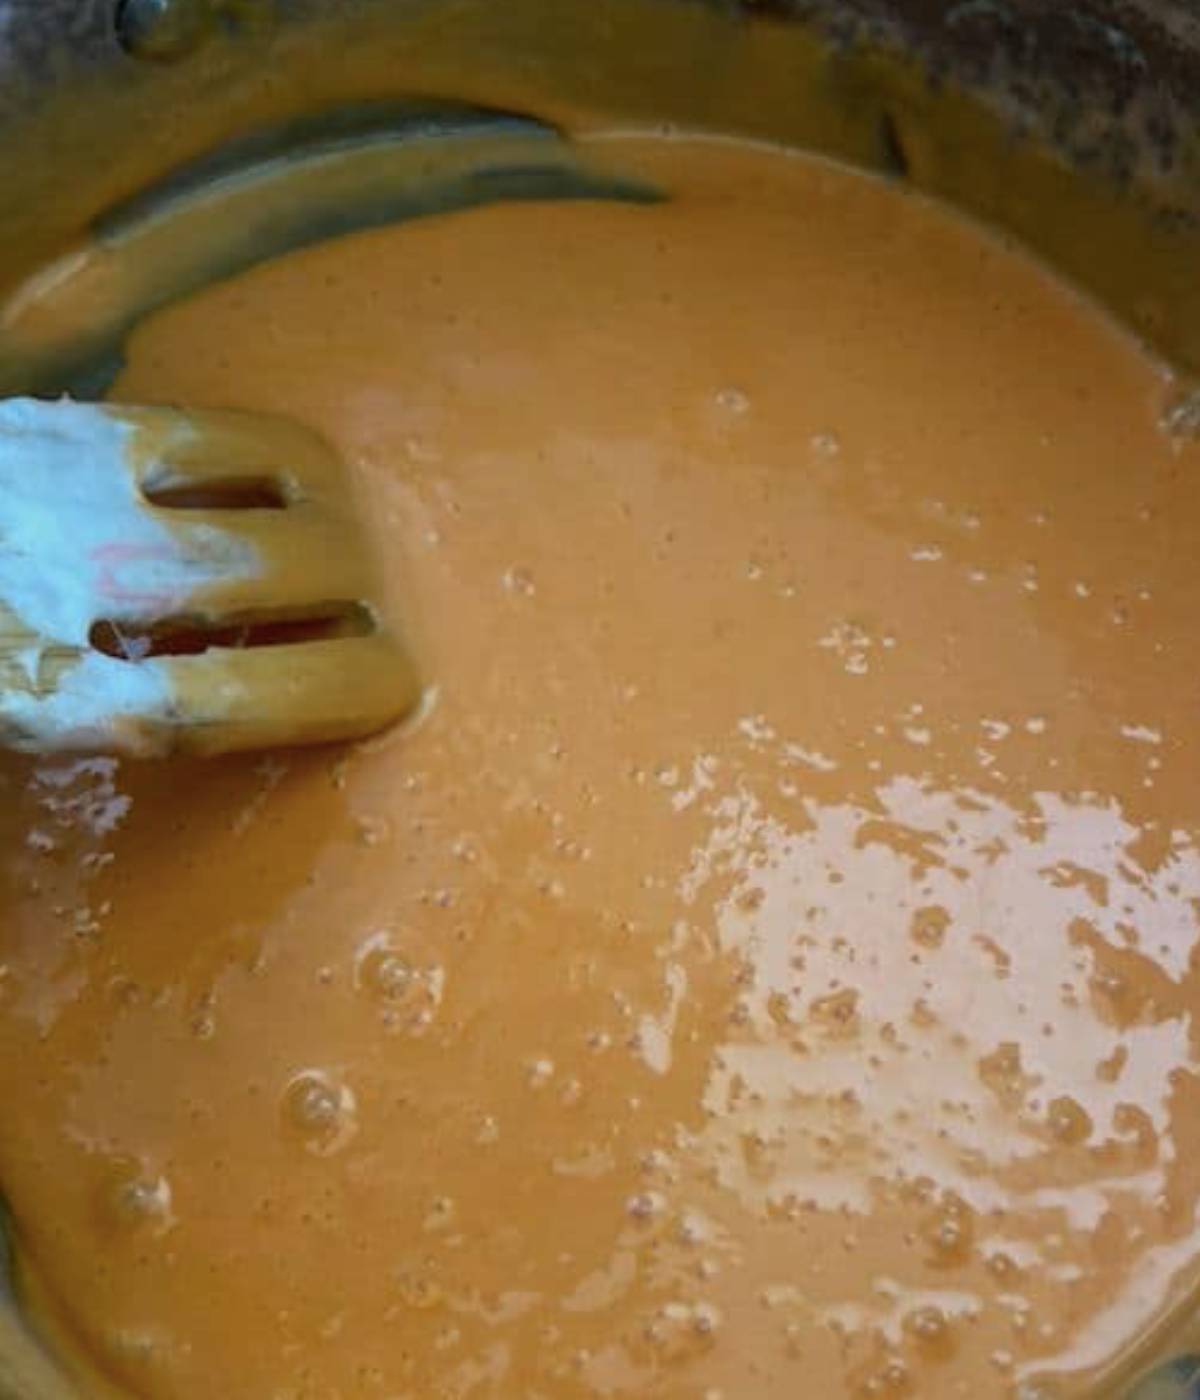 Orange Marshmallow filling in pot. 